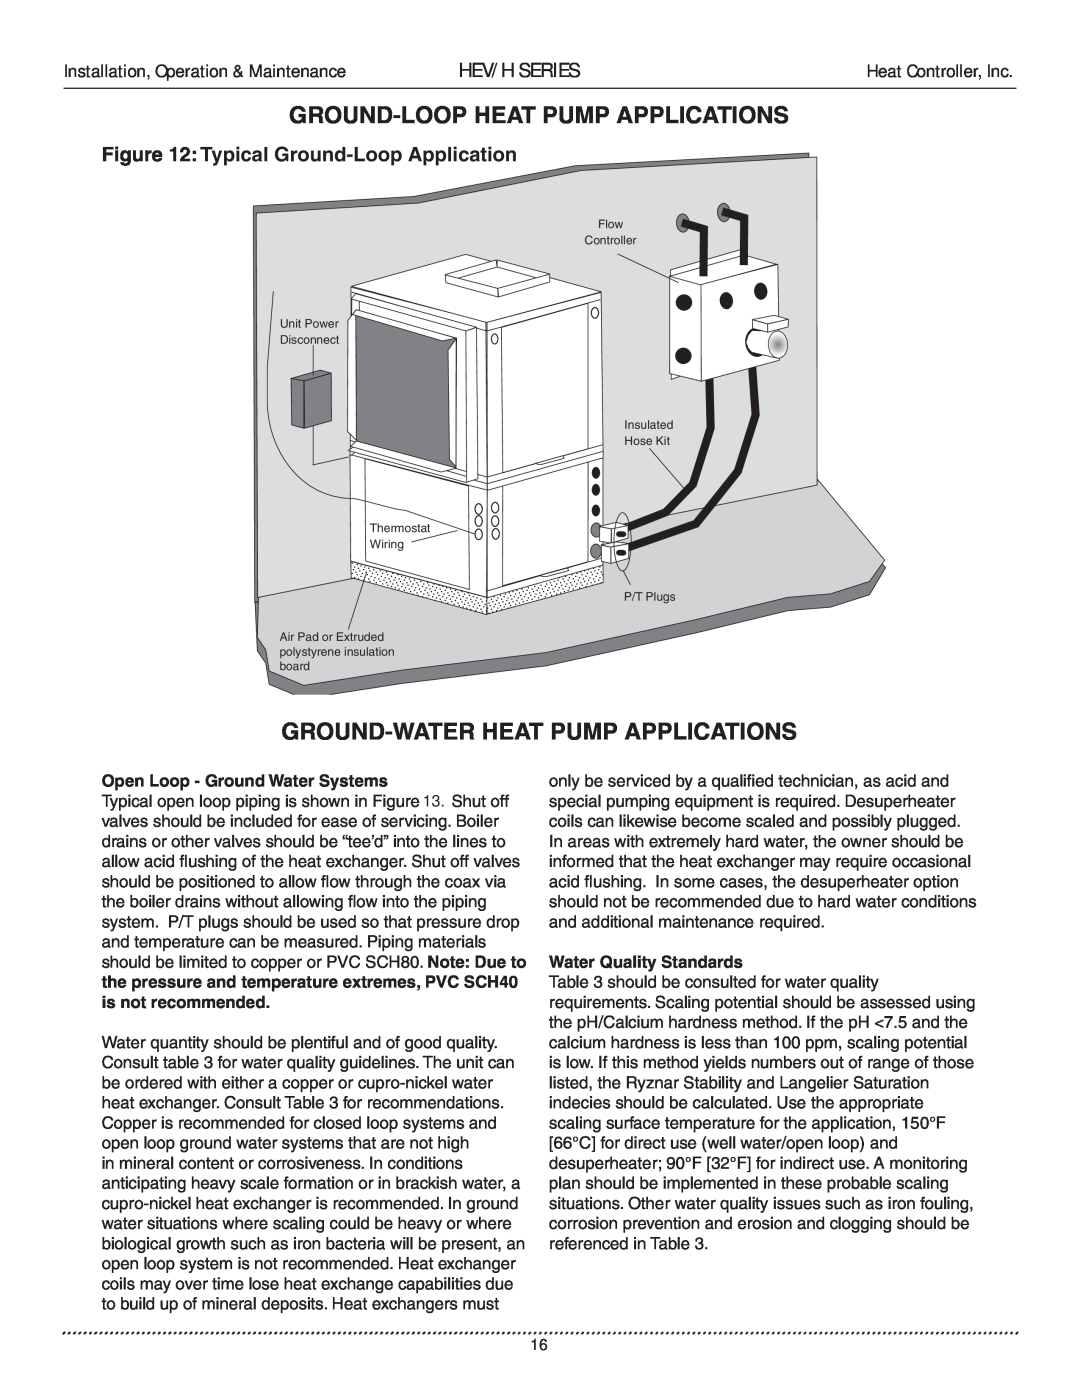 Heat Controller HEV/H manual Ground-Waterheat Pump Applications, Ground-Loopheat Pump Applications, Hev/H Series 